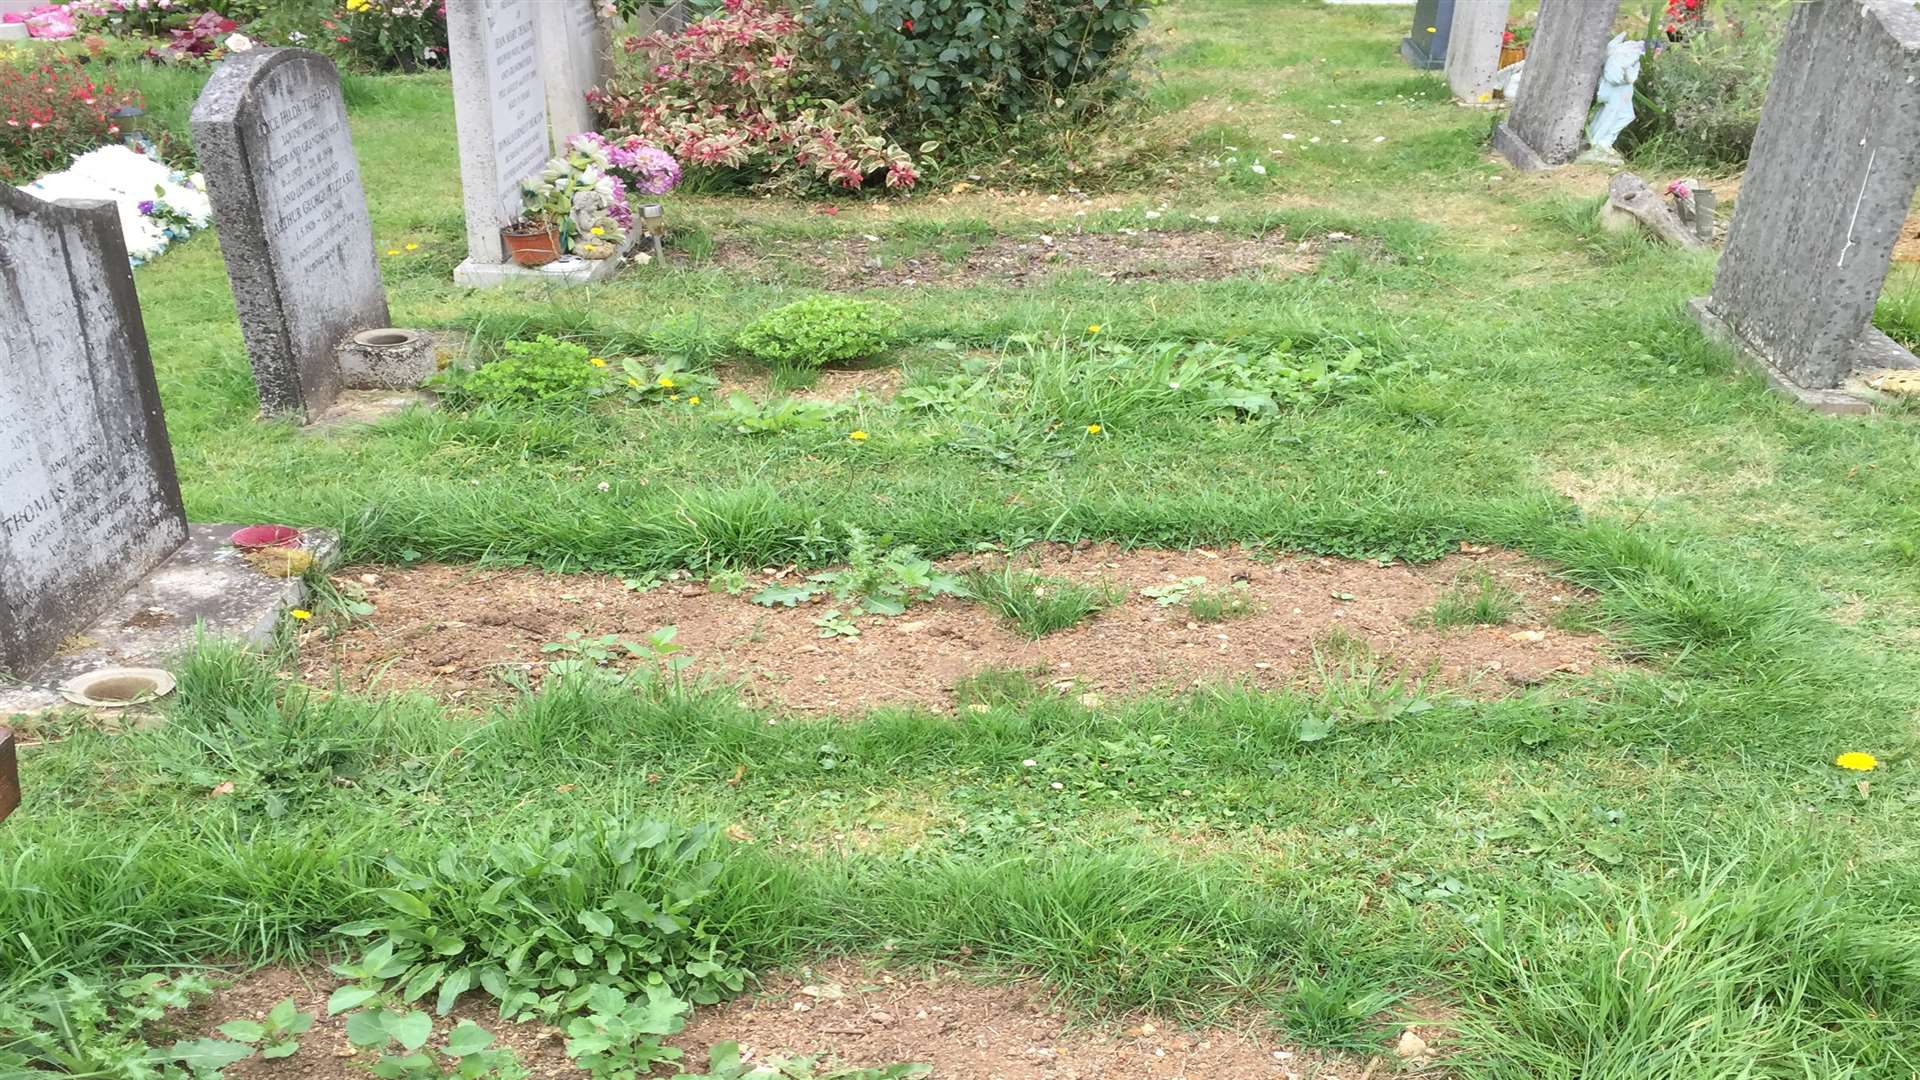 Overgrown graves at Bredhurst churchyard